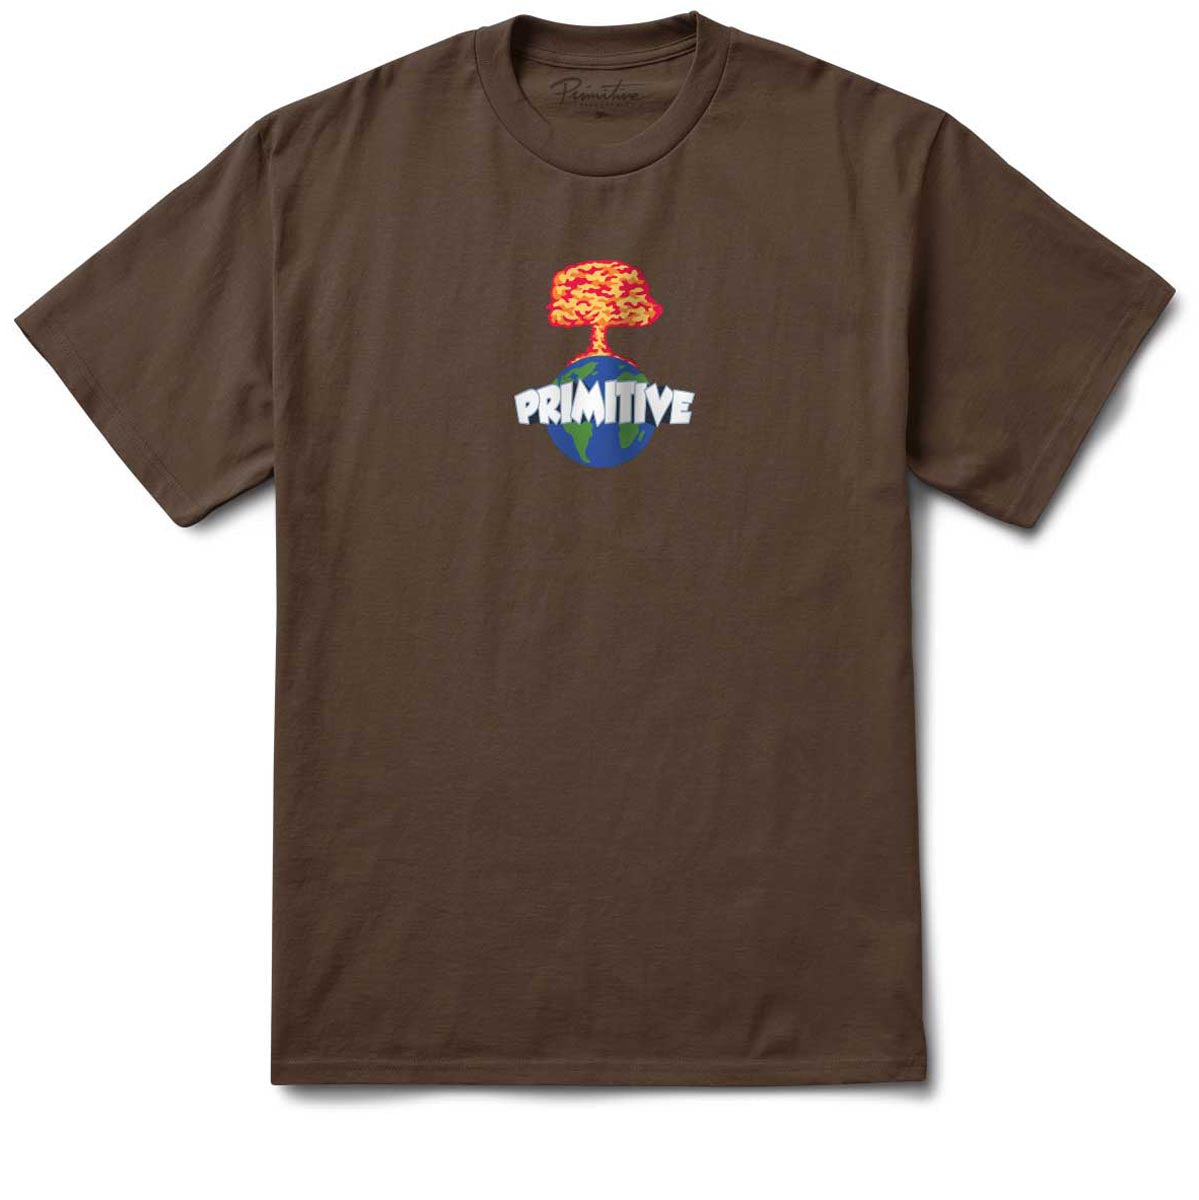 Primitive Oops T-Shirt - Brown image 1